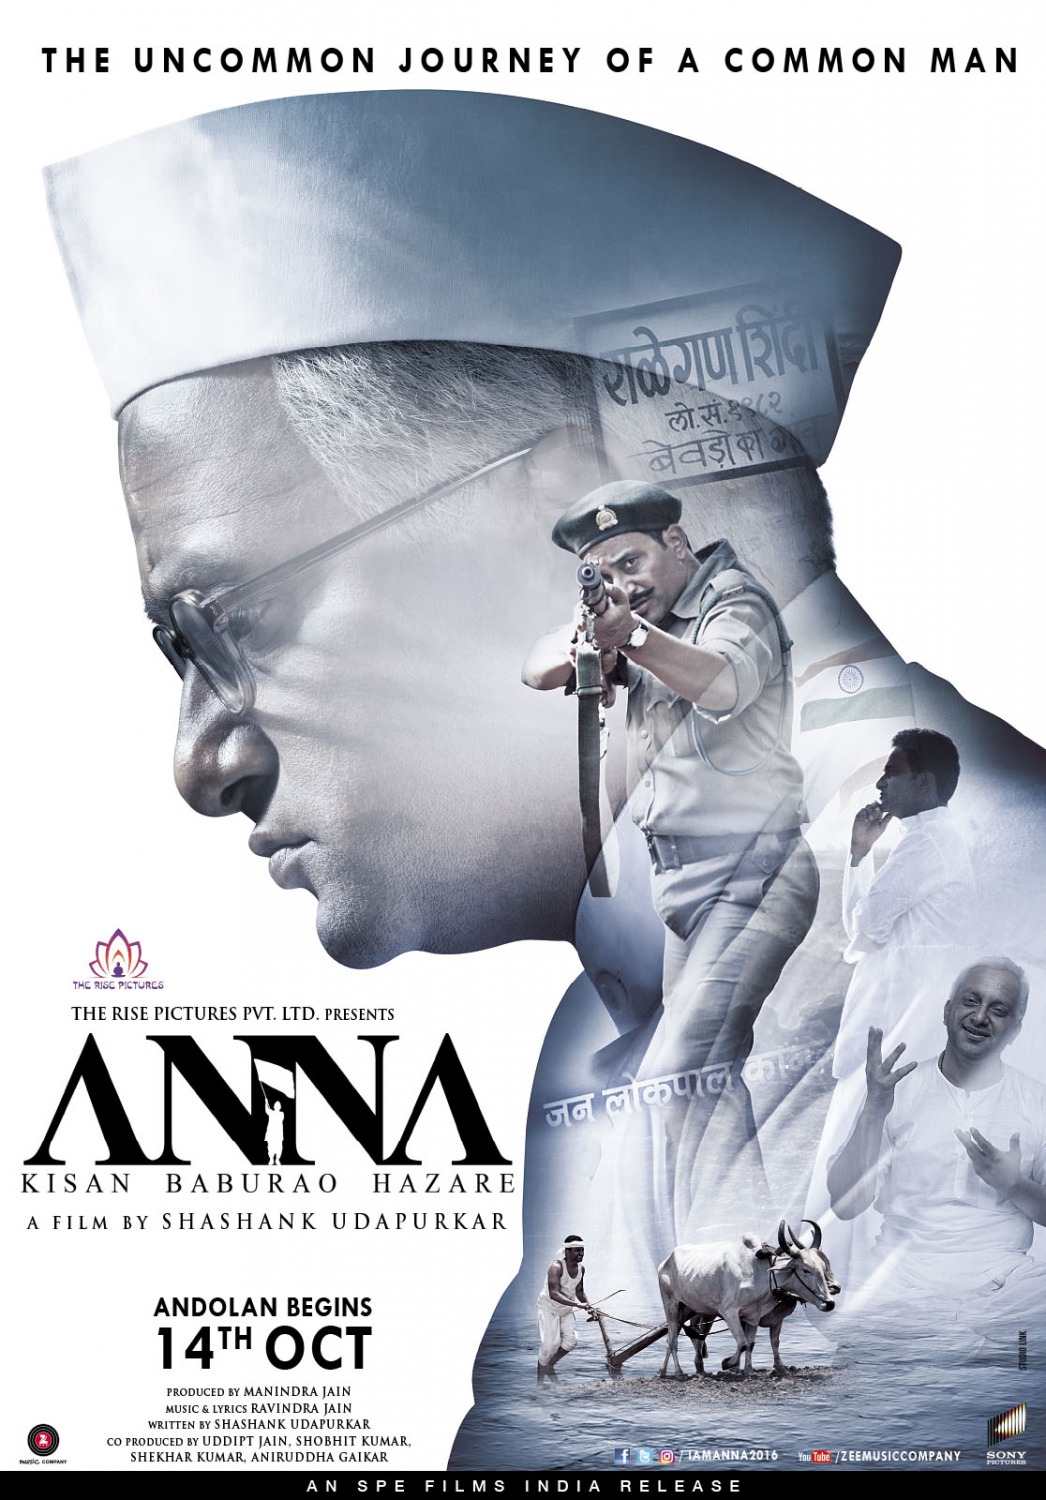 Extra Large Movie Poster Image for Anna, Kisan Baburao Hazare (#2 of 2)